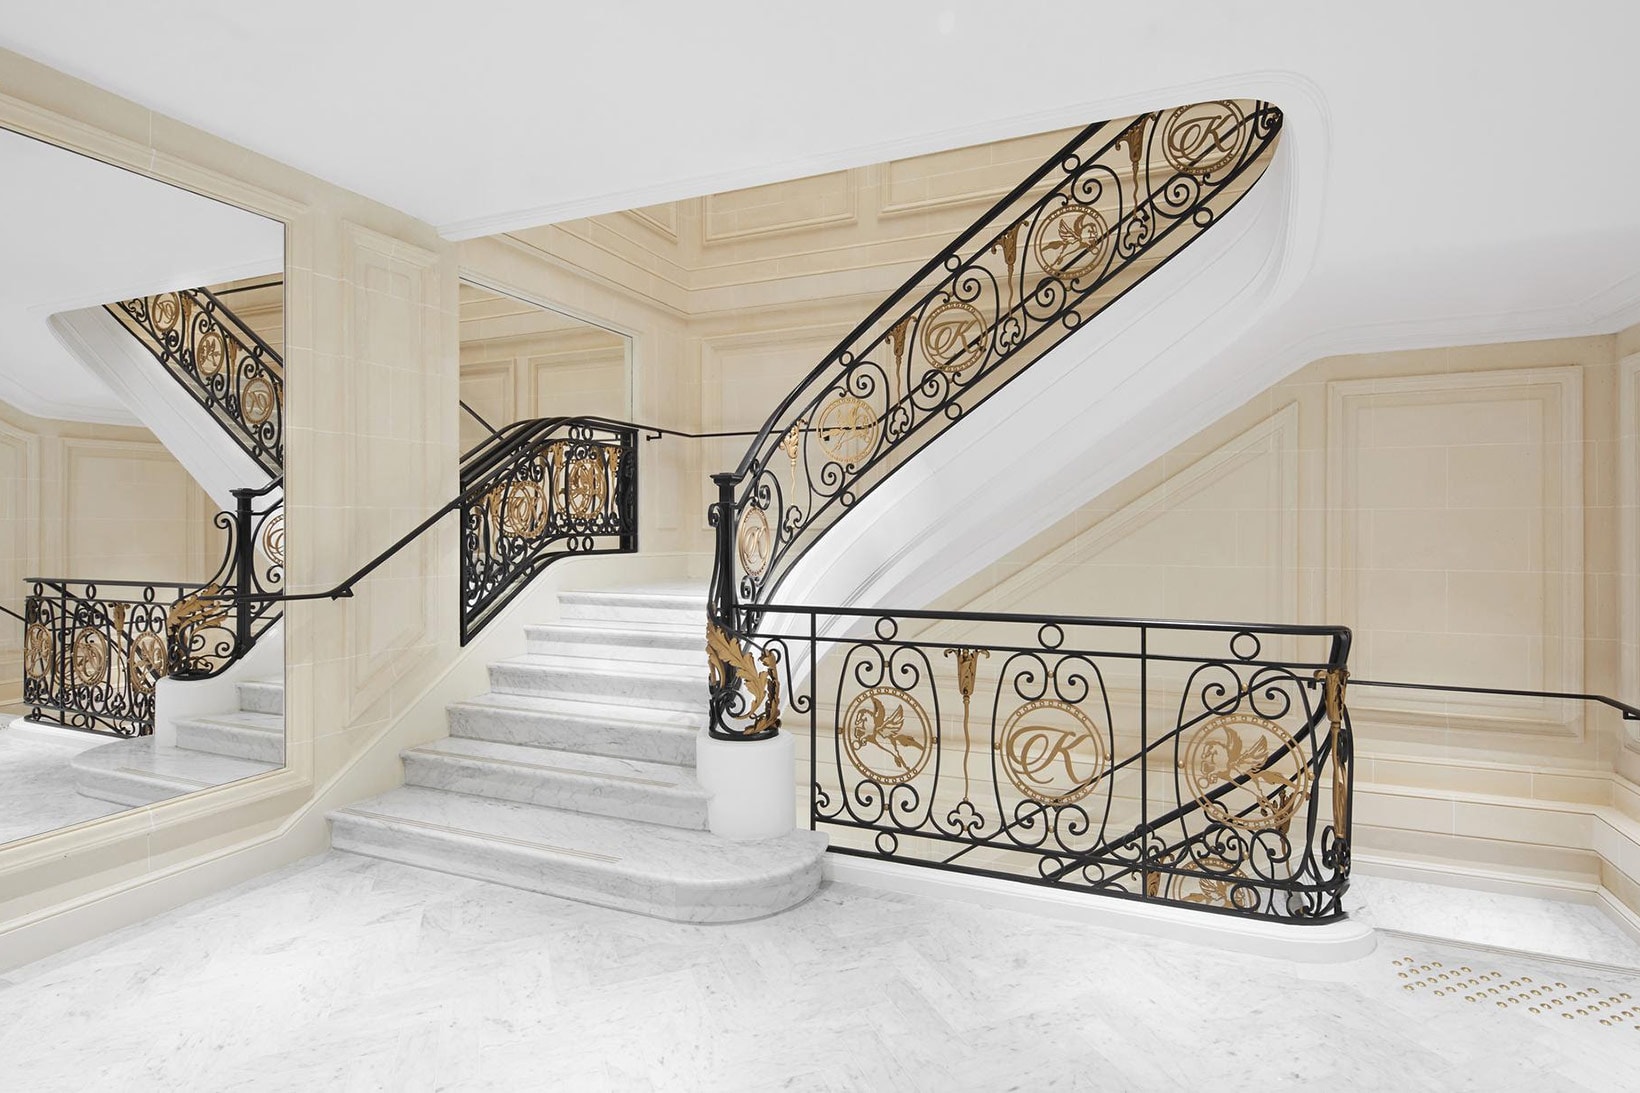 kith paris france retail store flagship interior stairs